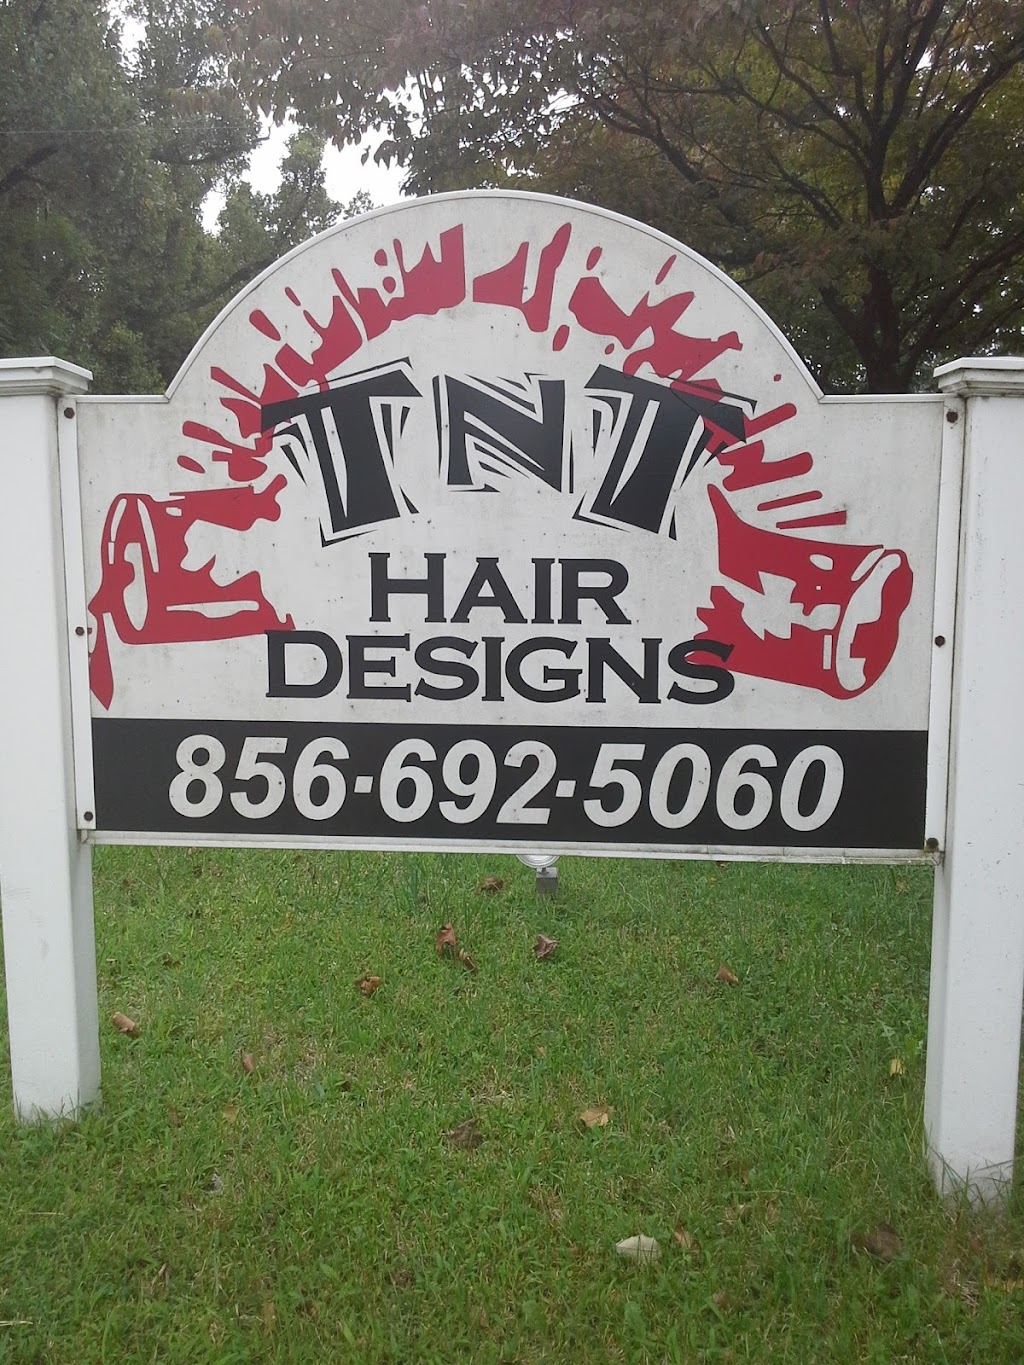 TNT Hair Designs | 1242 S Main Rd, Vineland, NJ 08360 | Phone: (856) 692-5060